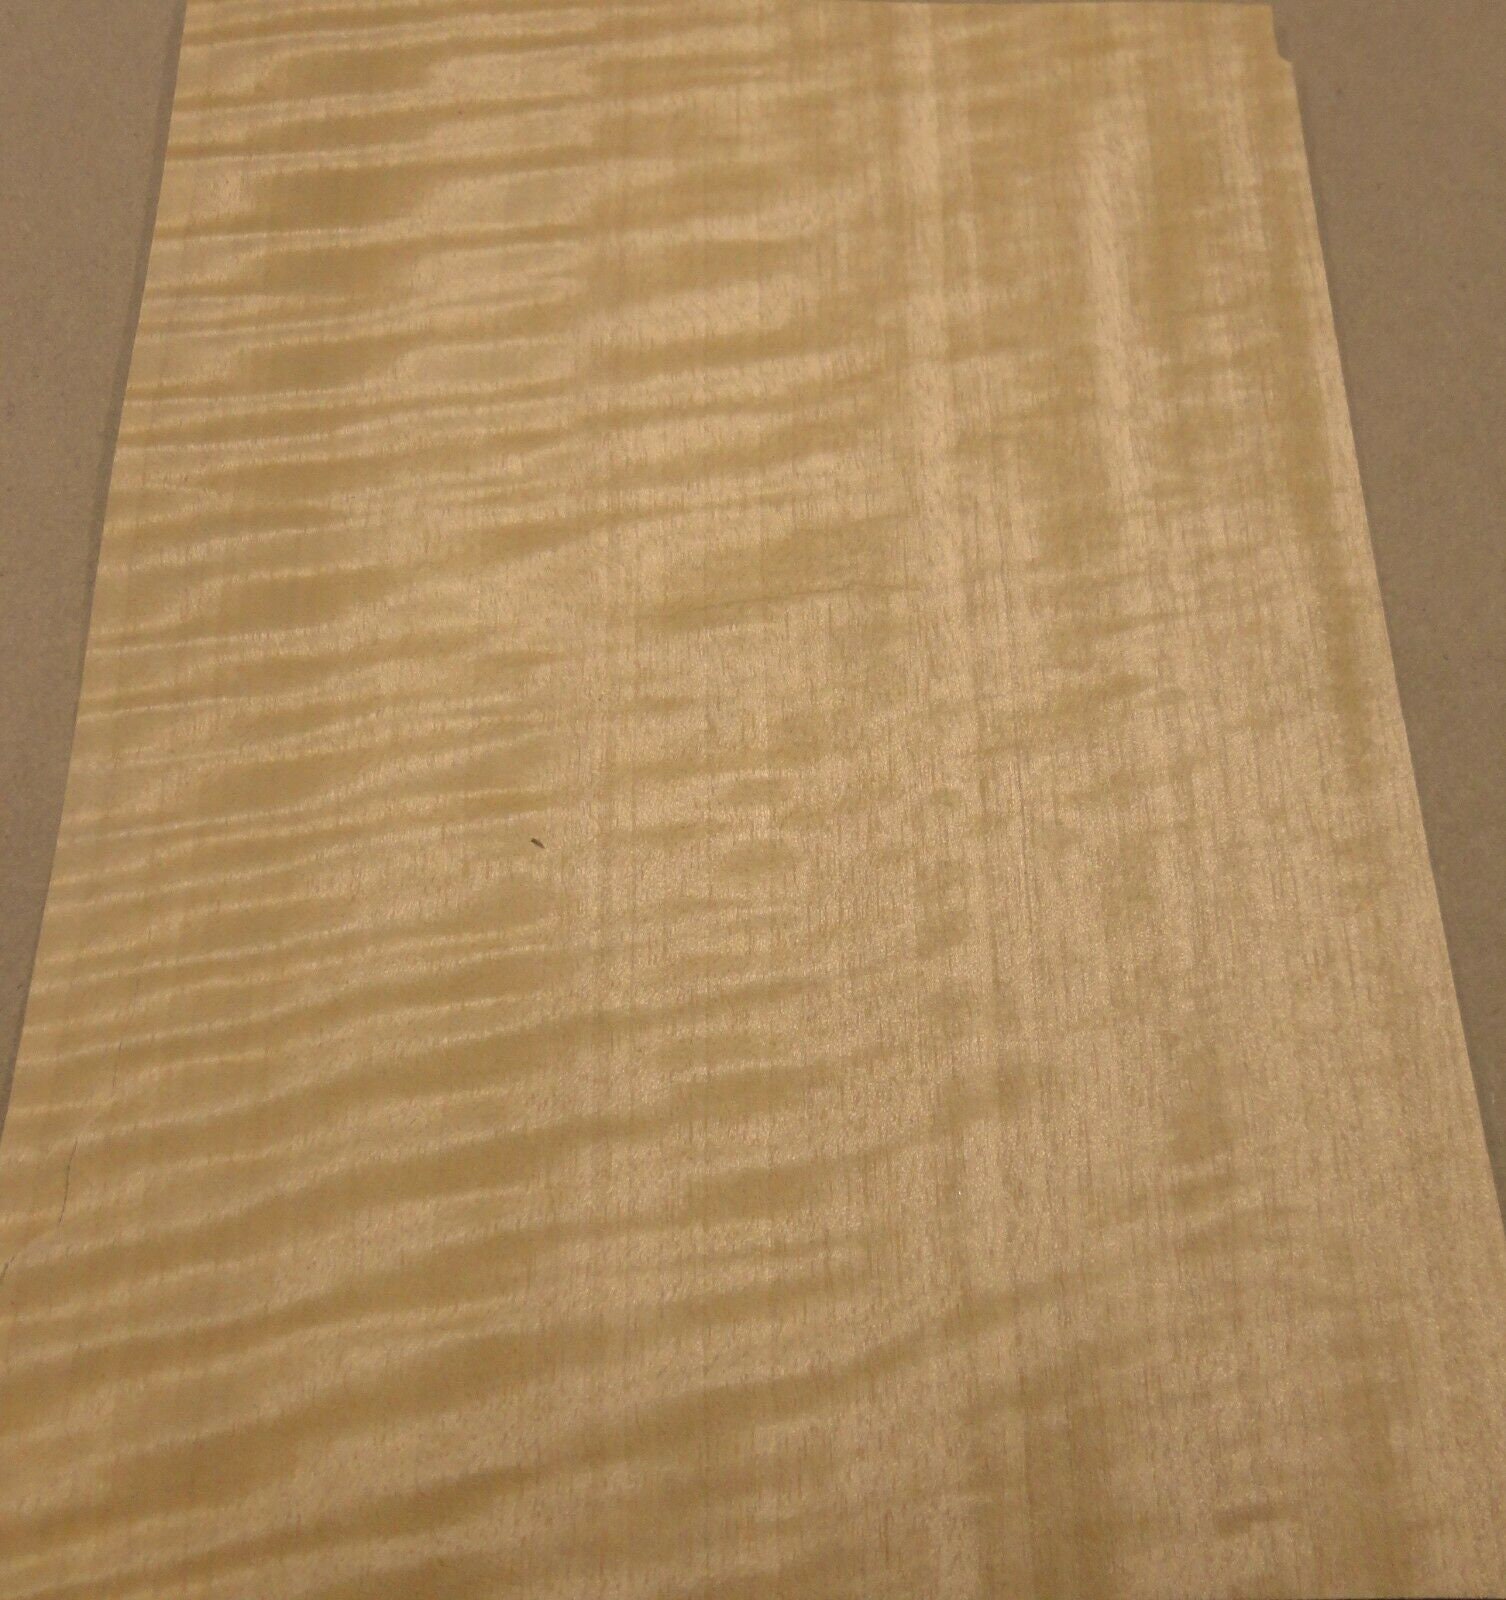 Anigre Figured wood veneer 3" x 4"  raw no backing "AA" grade 1/42" thickness 